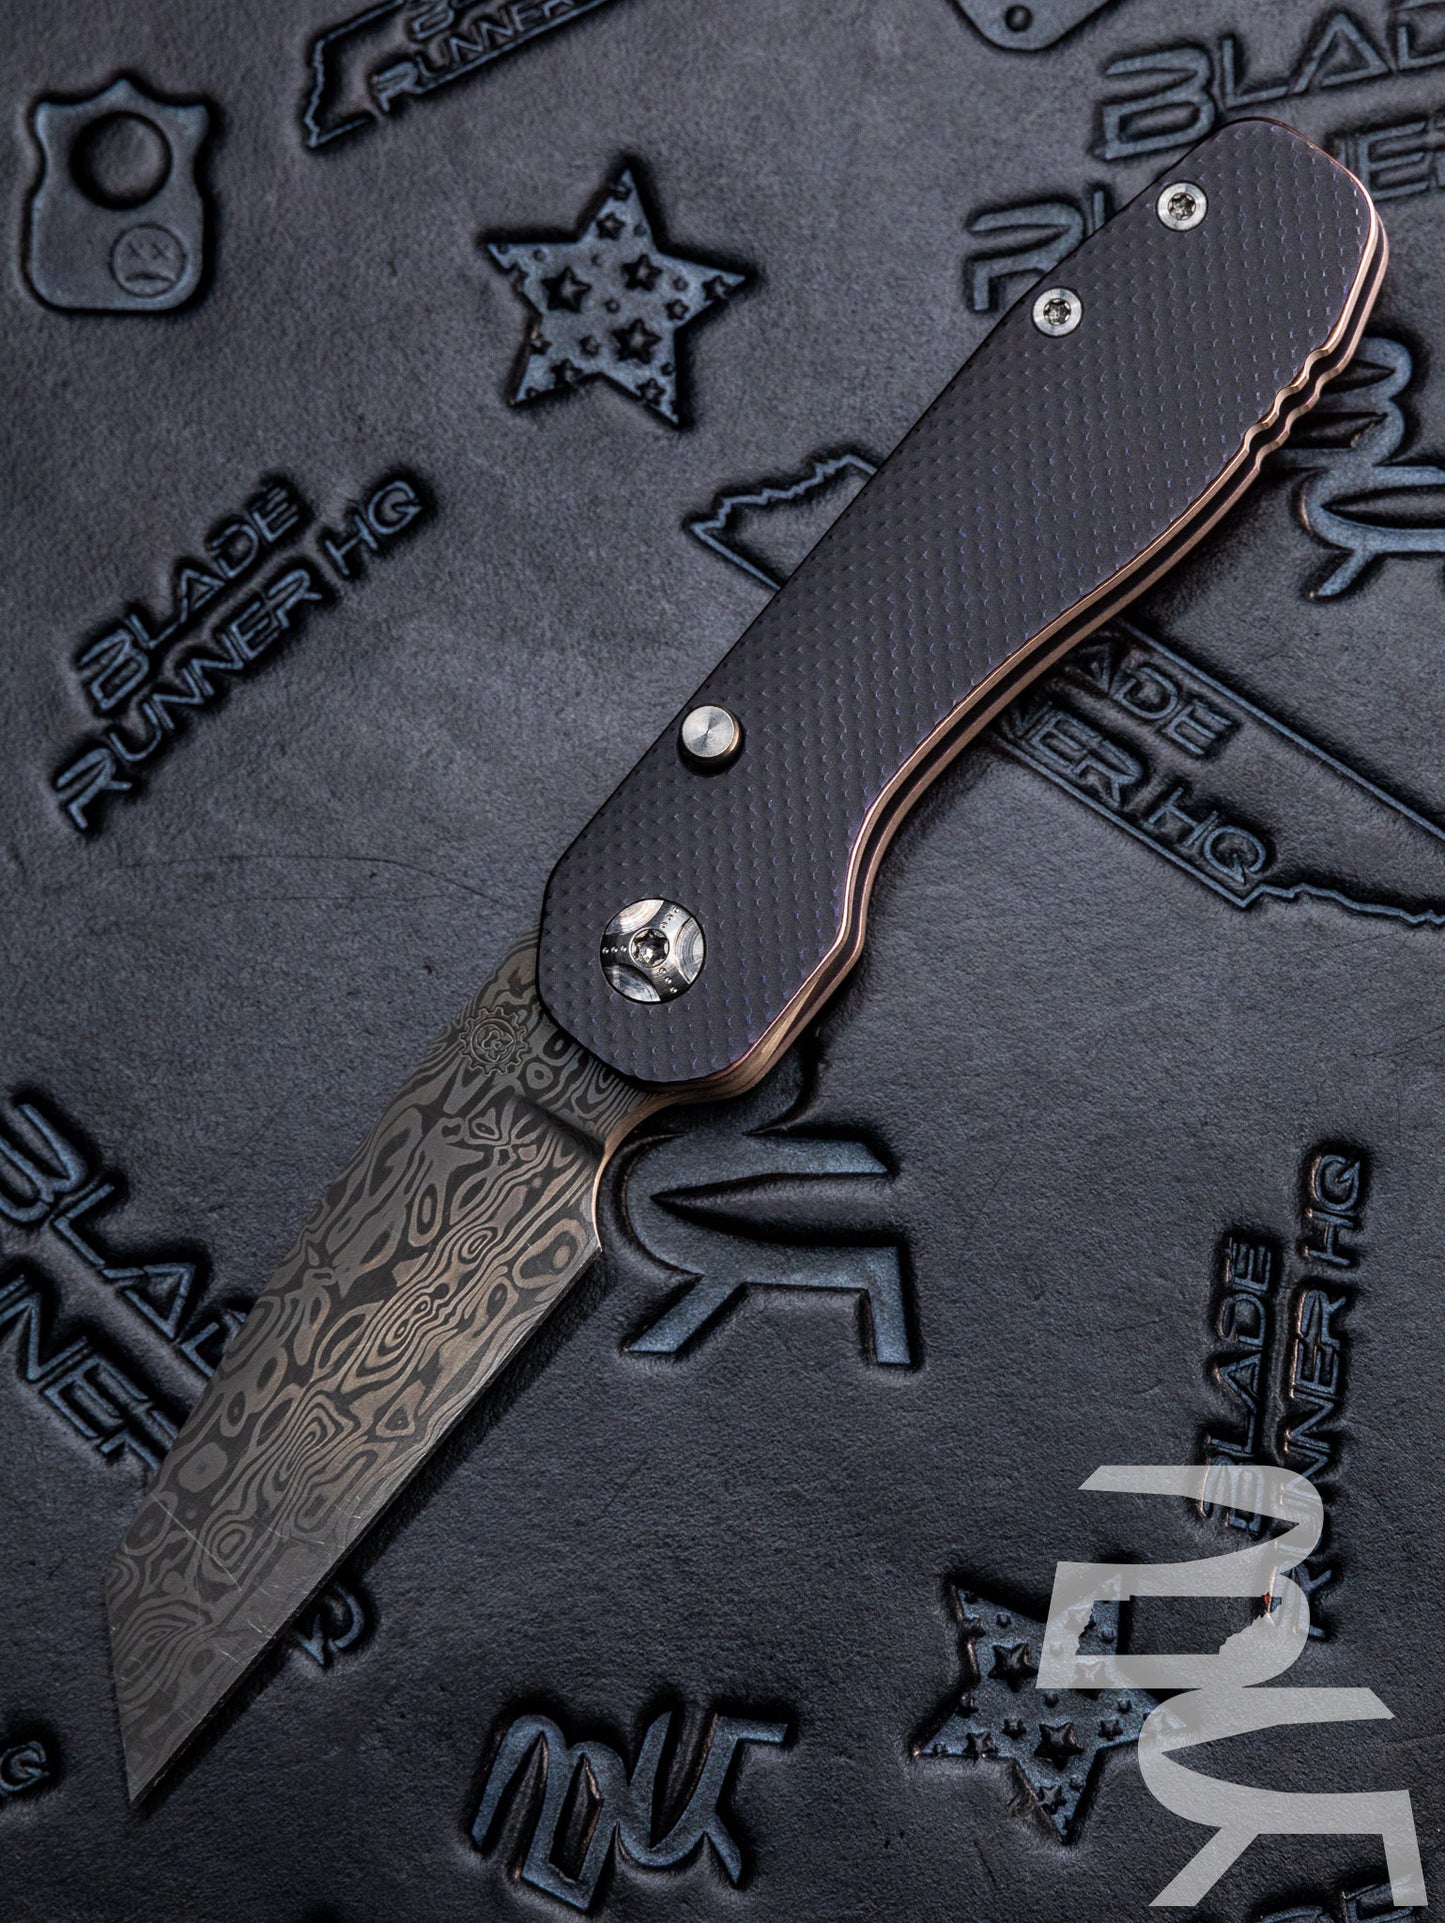 Pre Owned USED Smock Knives Custom SK23 Flipper Knife 3.125" Damasteel Wharncliffe Blade, Gray Milled Titanium Handles, Frame Lock